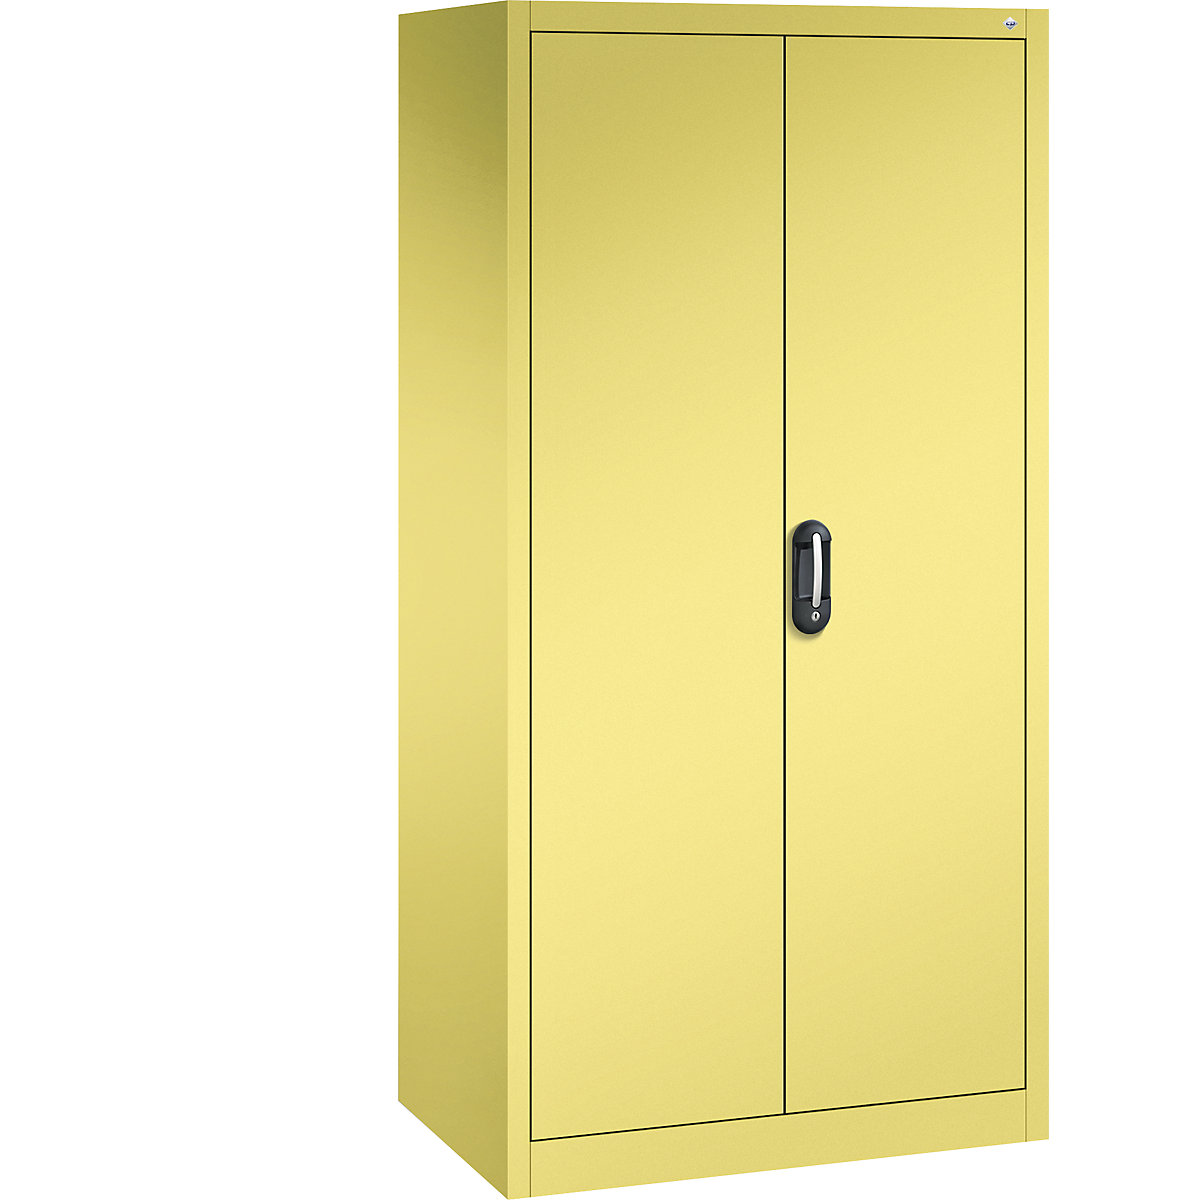 ACURADO universal cupboard – C+P, WxD 930 x 600 mm, sulphur yellow / sulphur yellow-24